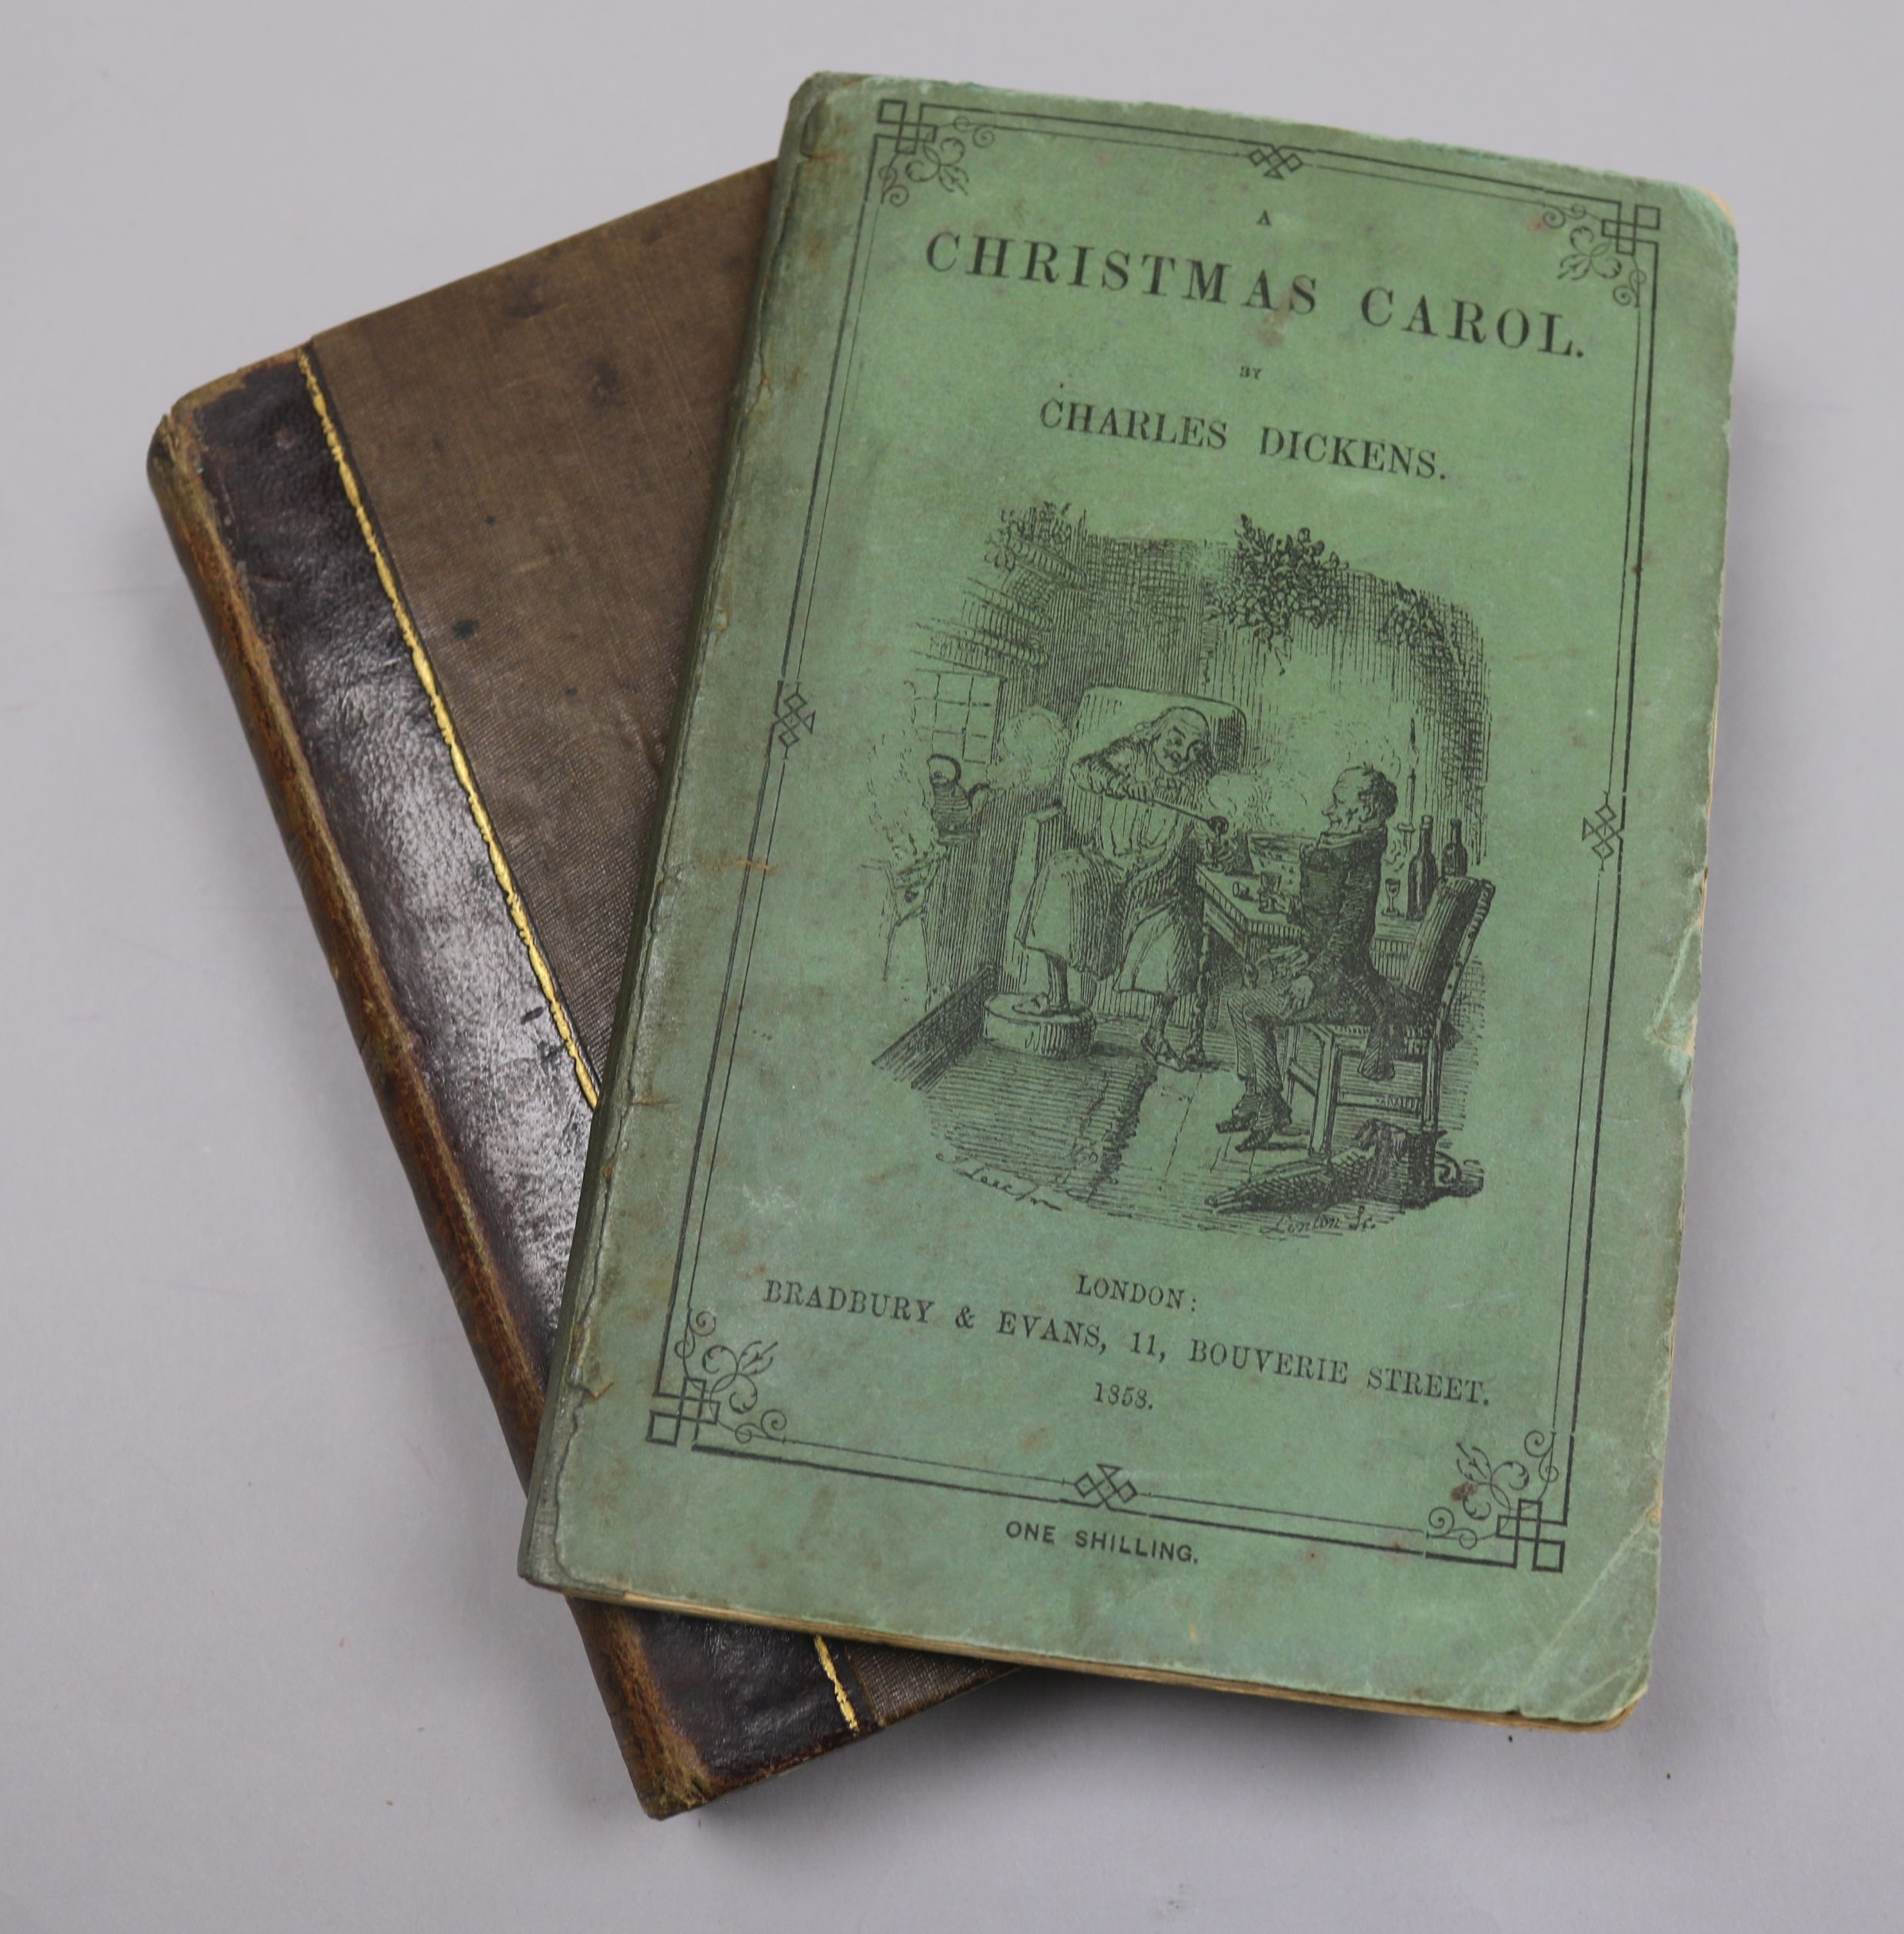 Dickens, Charles - A Christmas Carol, 8vo, original printed wraps, Bradbury and Evans, London 1858